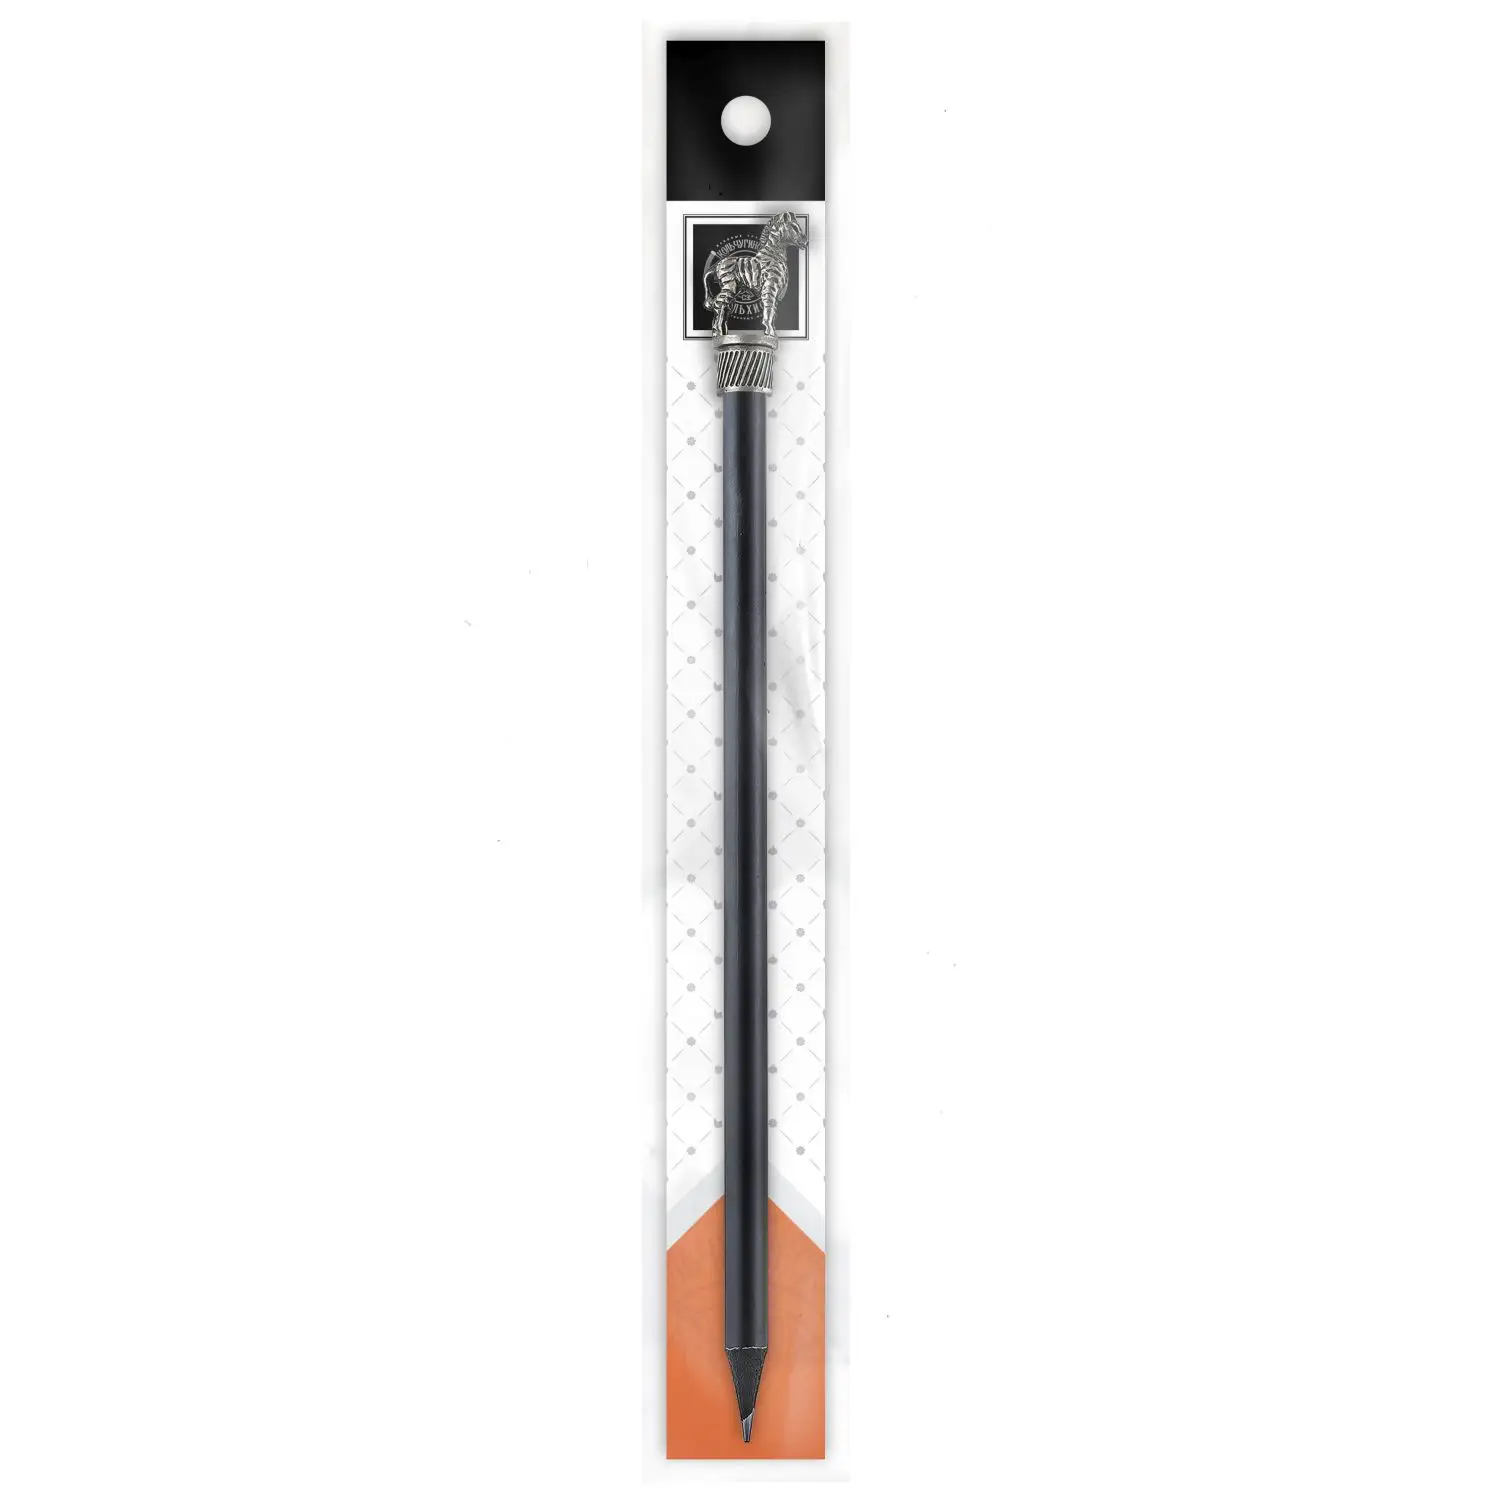 Карандаш Сафари-Зебра латунный посеребренный с чернением карандаш самовар латунный посеребренный с чернением